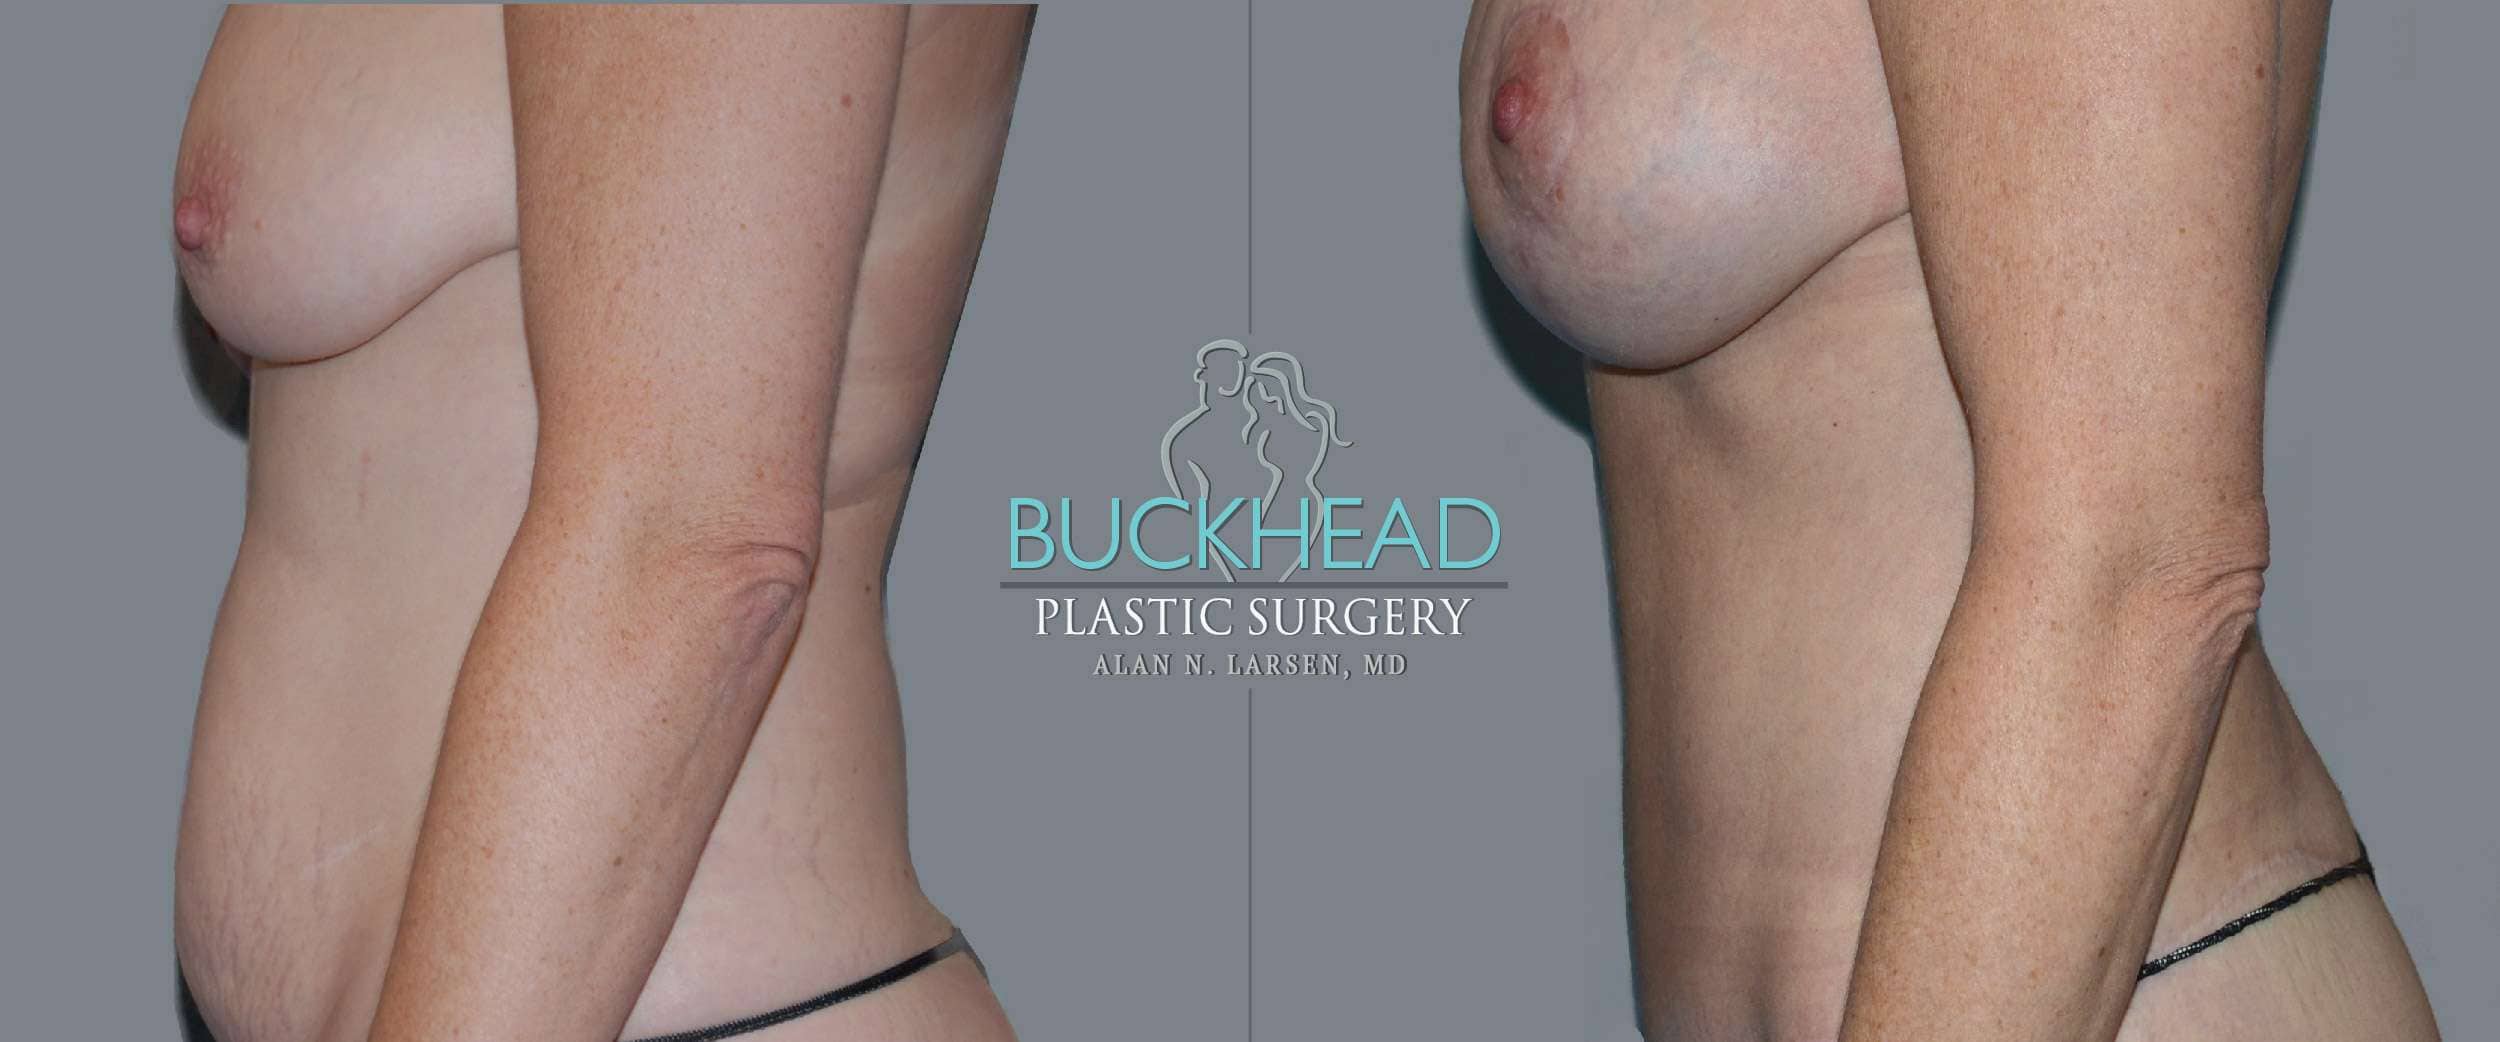 Before and After Photo Gallery | Liposuction | Buckhead Plastic Surgery | Alan N. Larsen, MD | Board-Certified Plastic Surgeon | Atlanta GA